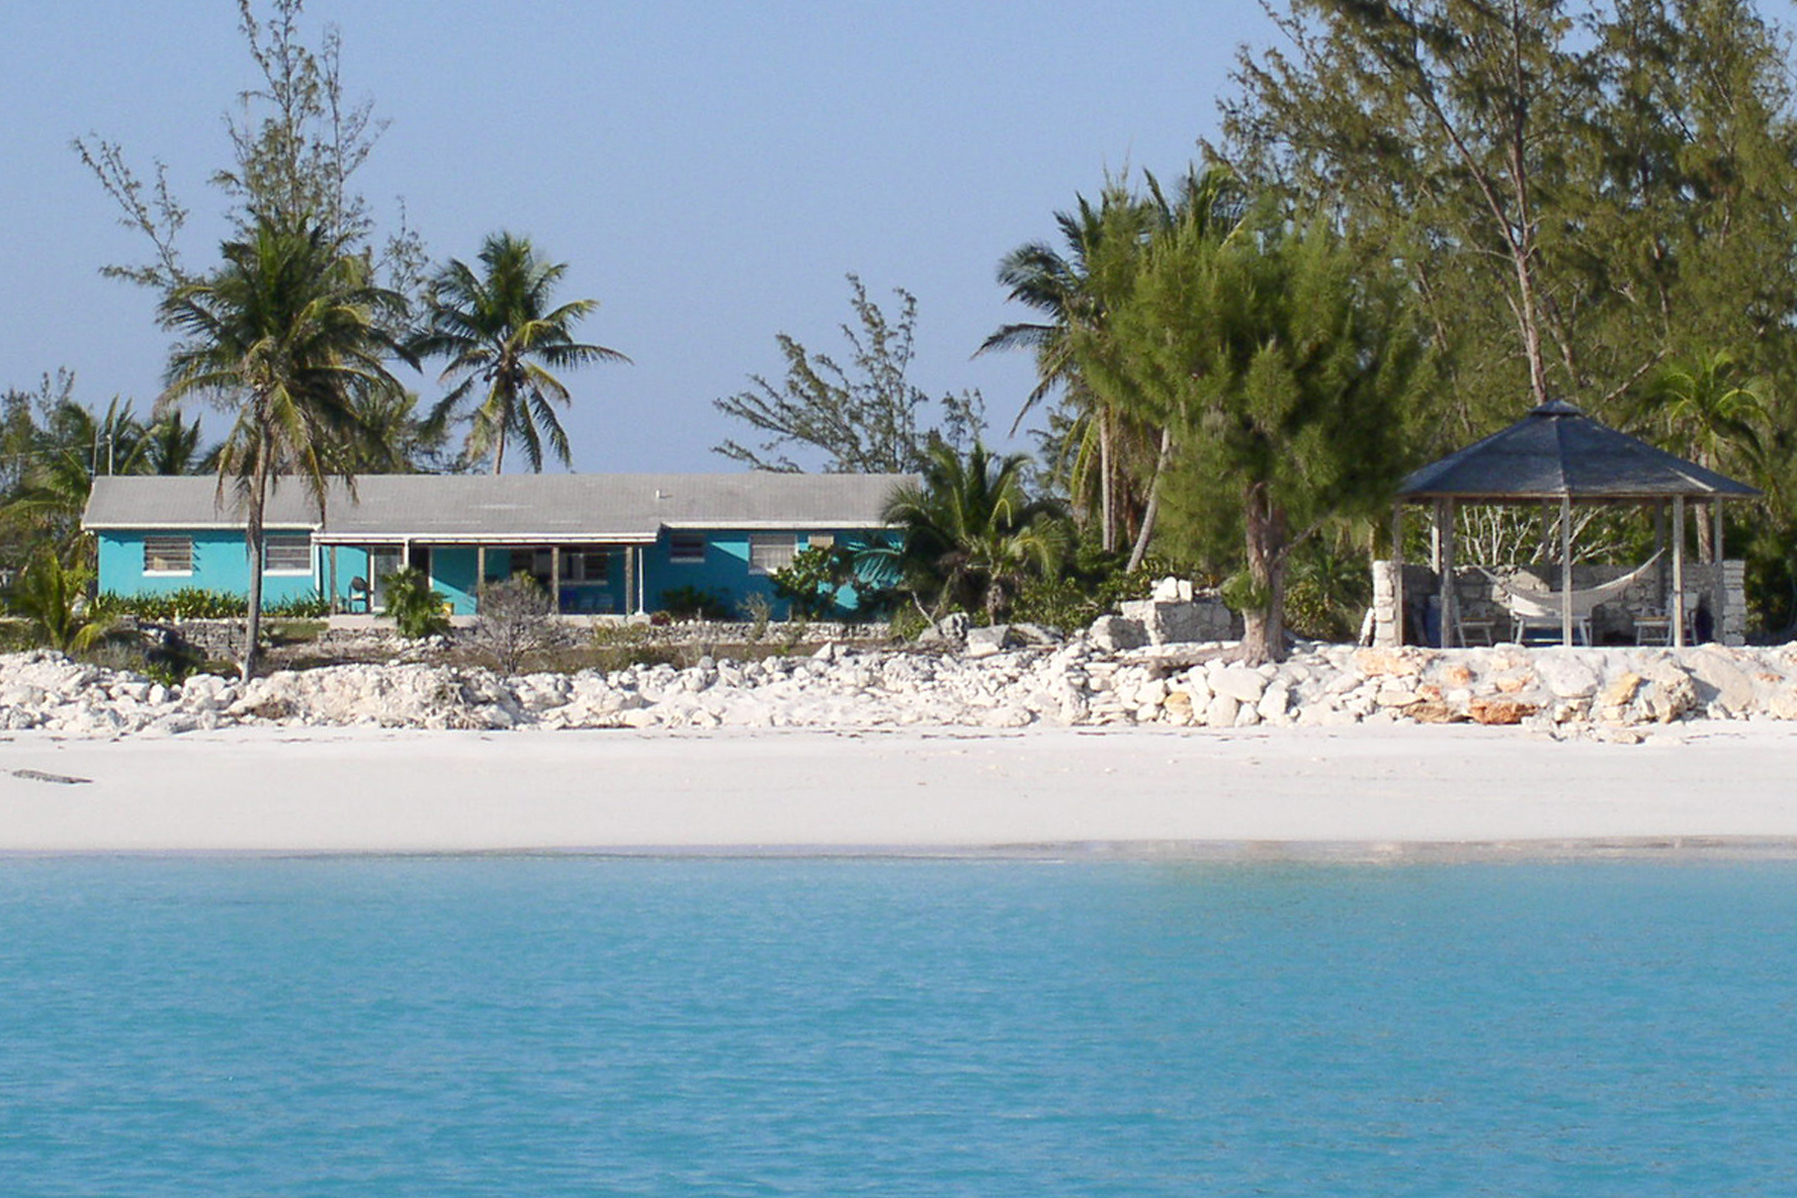 Beachfront home long island bahamas